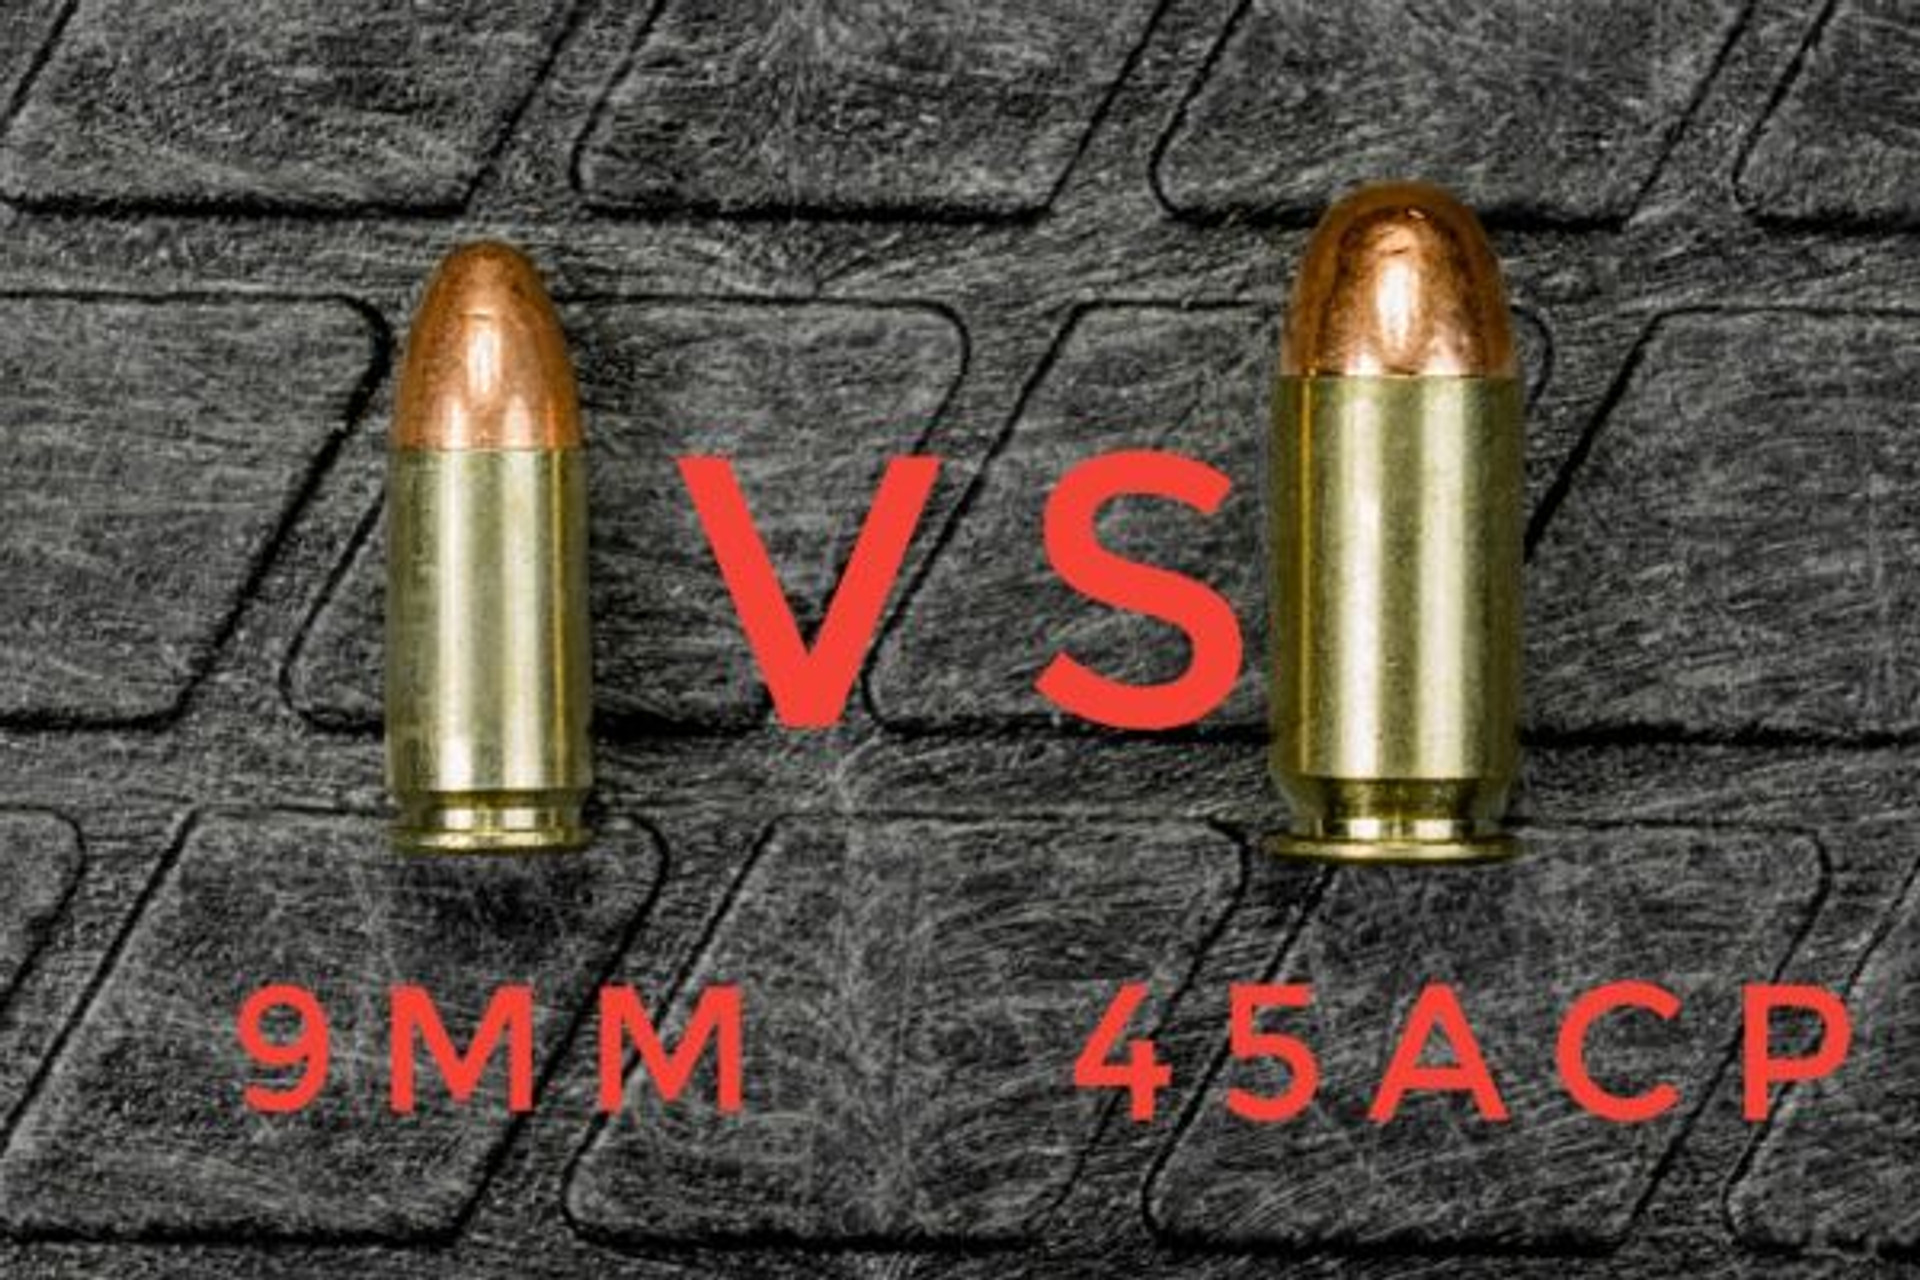 45. vs 9mm